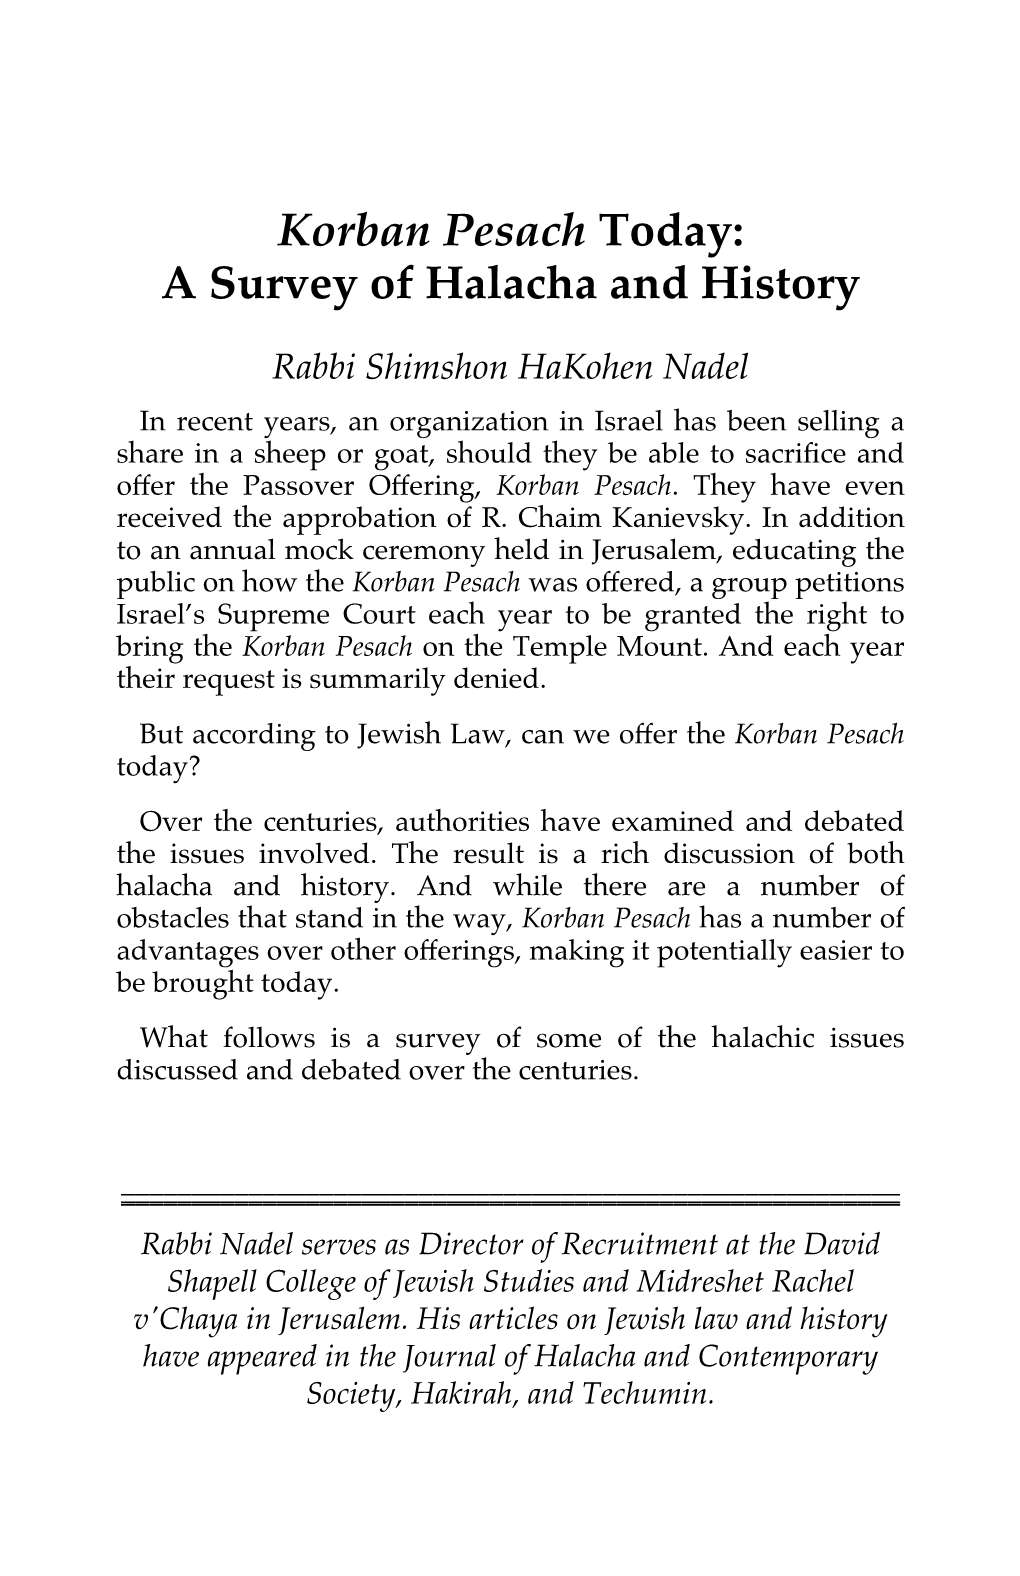 Korban Pesach Today: a Survey of Halacha and History